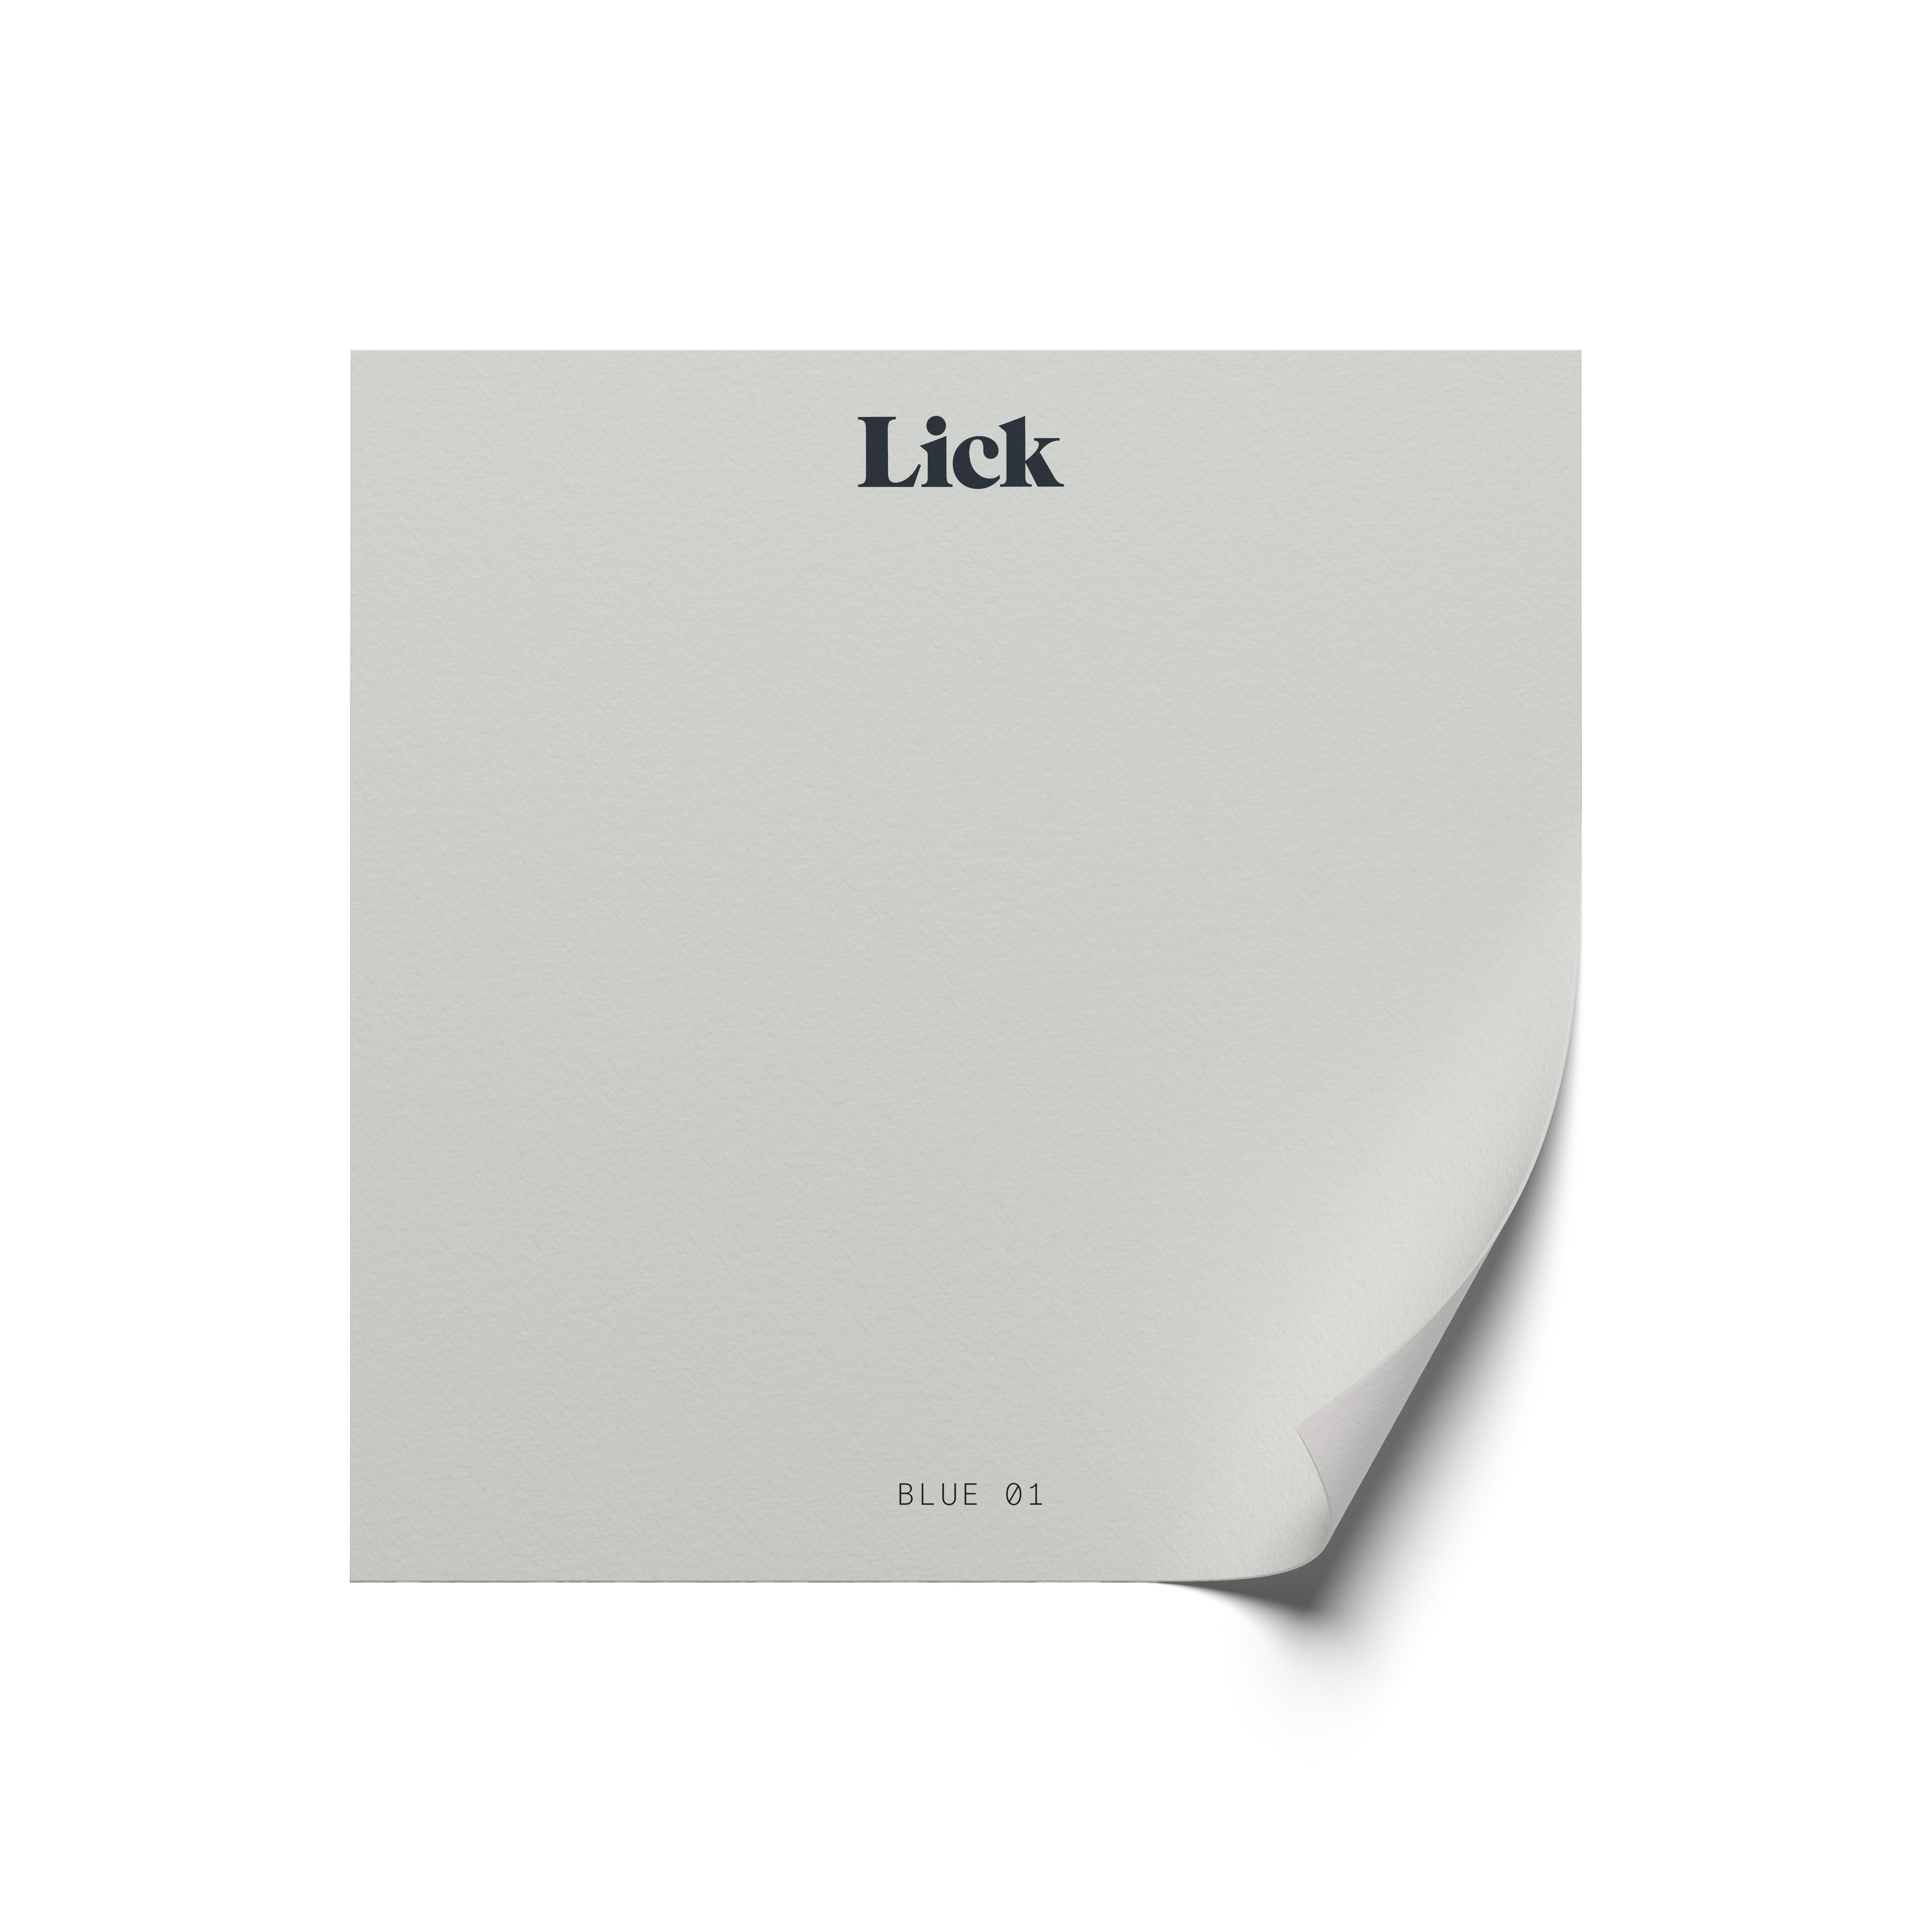 Lick Blue 01 Peel & stick Tester